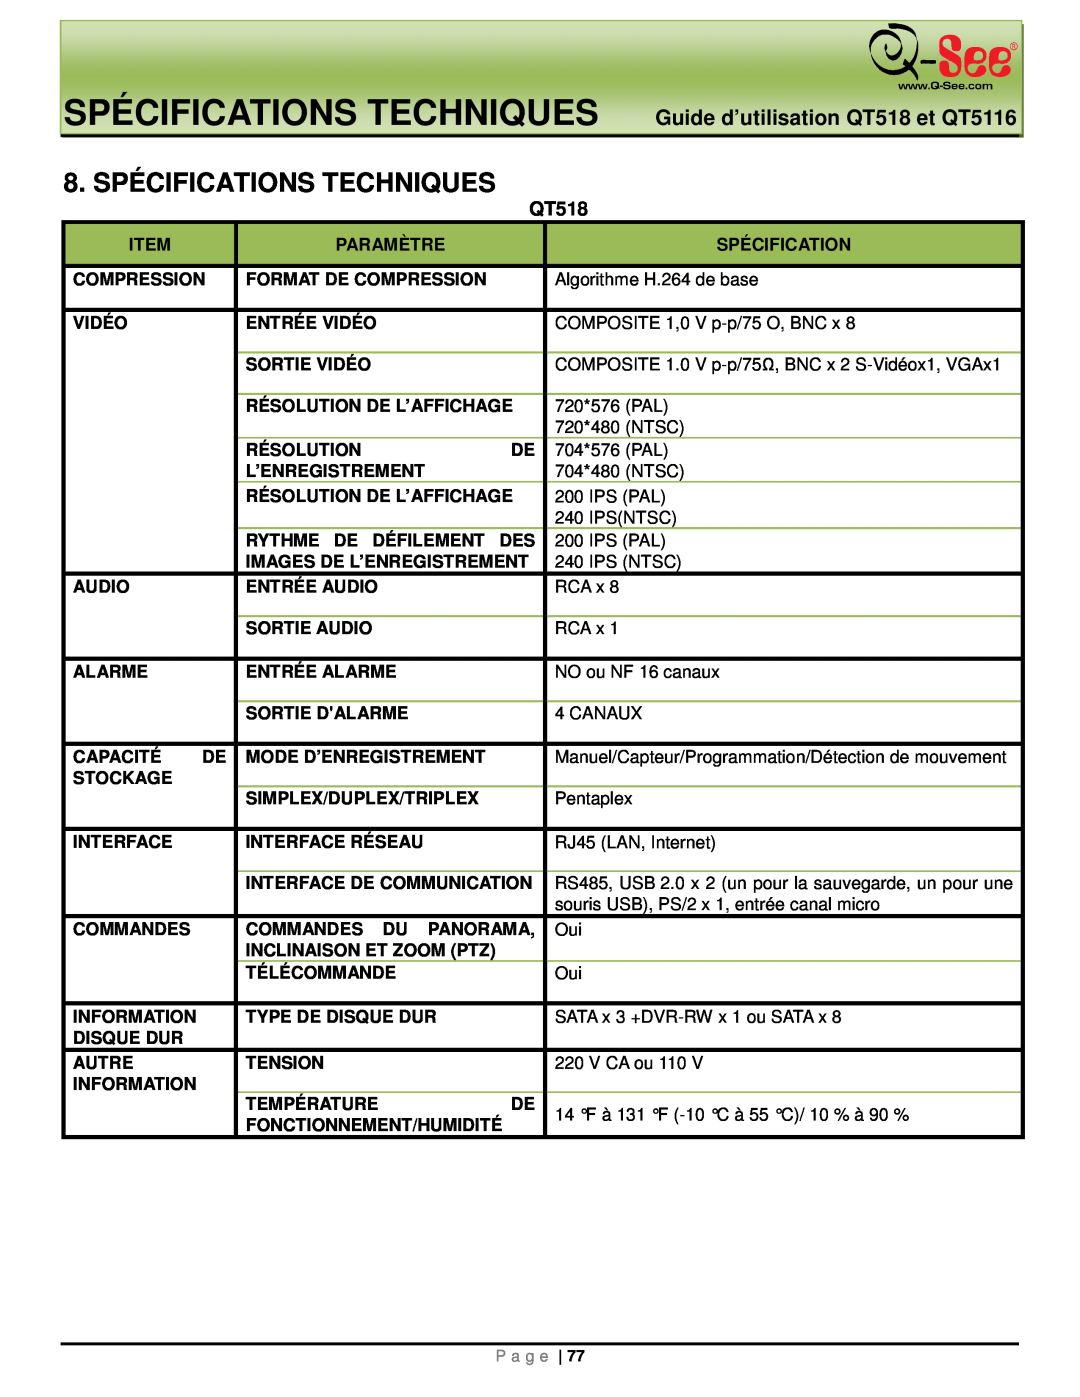 Q-See manual Spécifications Techniques, 8. SPÉCIFICATIONS TECHNIQUES, Guide d’utilisation QT518 et QT5116 